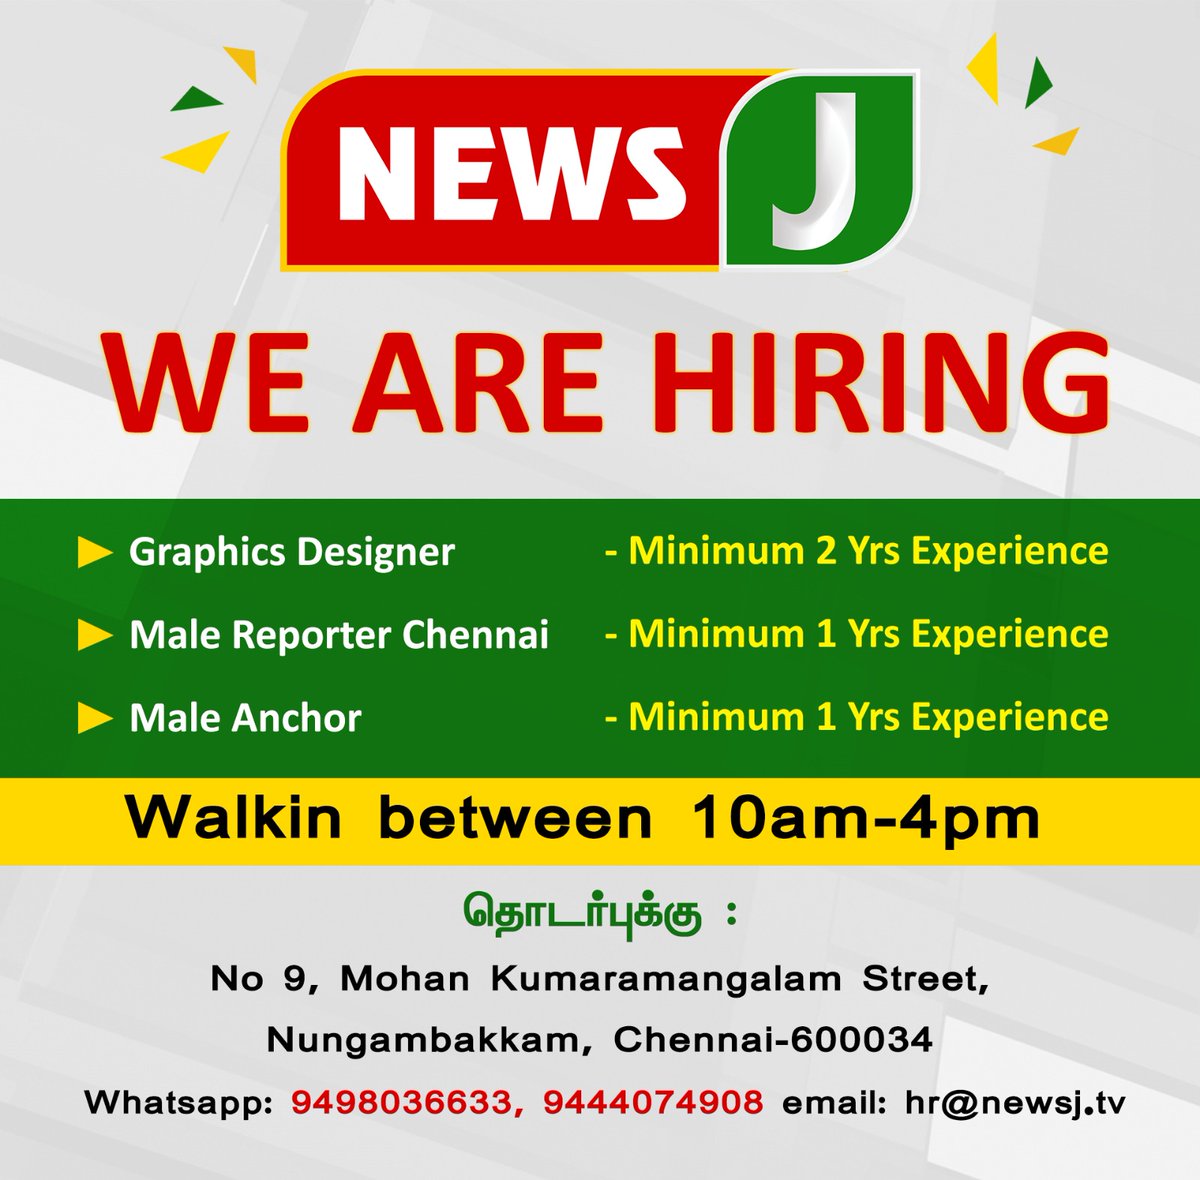 #WEAREHIRING || Job Opening For NEWS ANCHOR | GRAPHICS DESIGNER | MALE ANCHOR | MALE REPORTER CHENNAI
 
#Job | #jobVacancy | #JobOpening | #hiringnow | #careers | #jobannouncement | #recruitment | #hiring | #jobopportunities | #NewsJ | #NewsJTamil